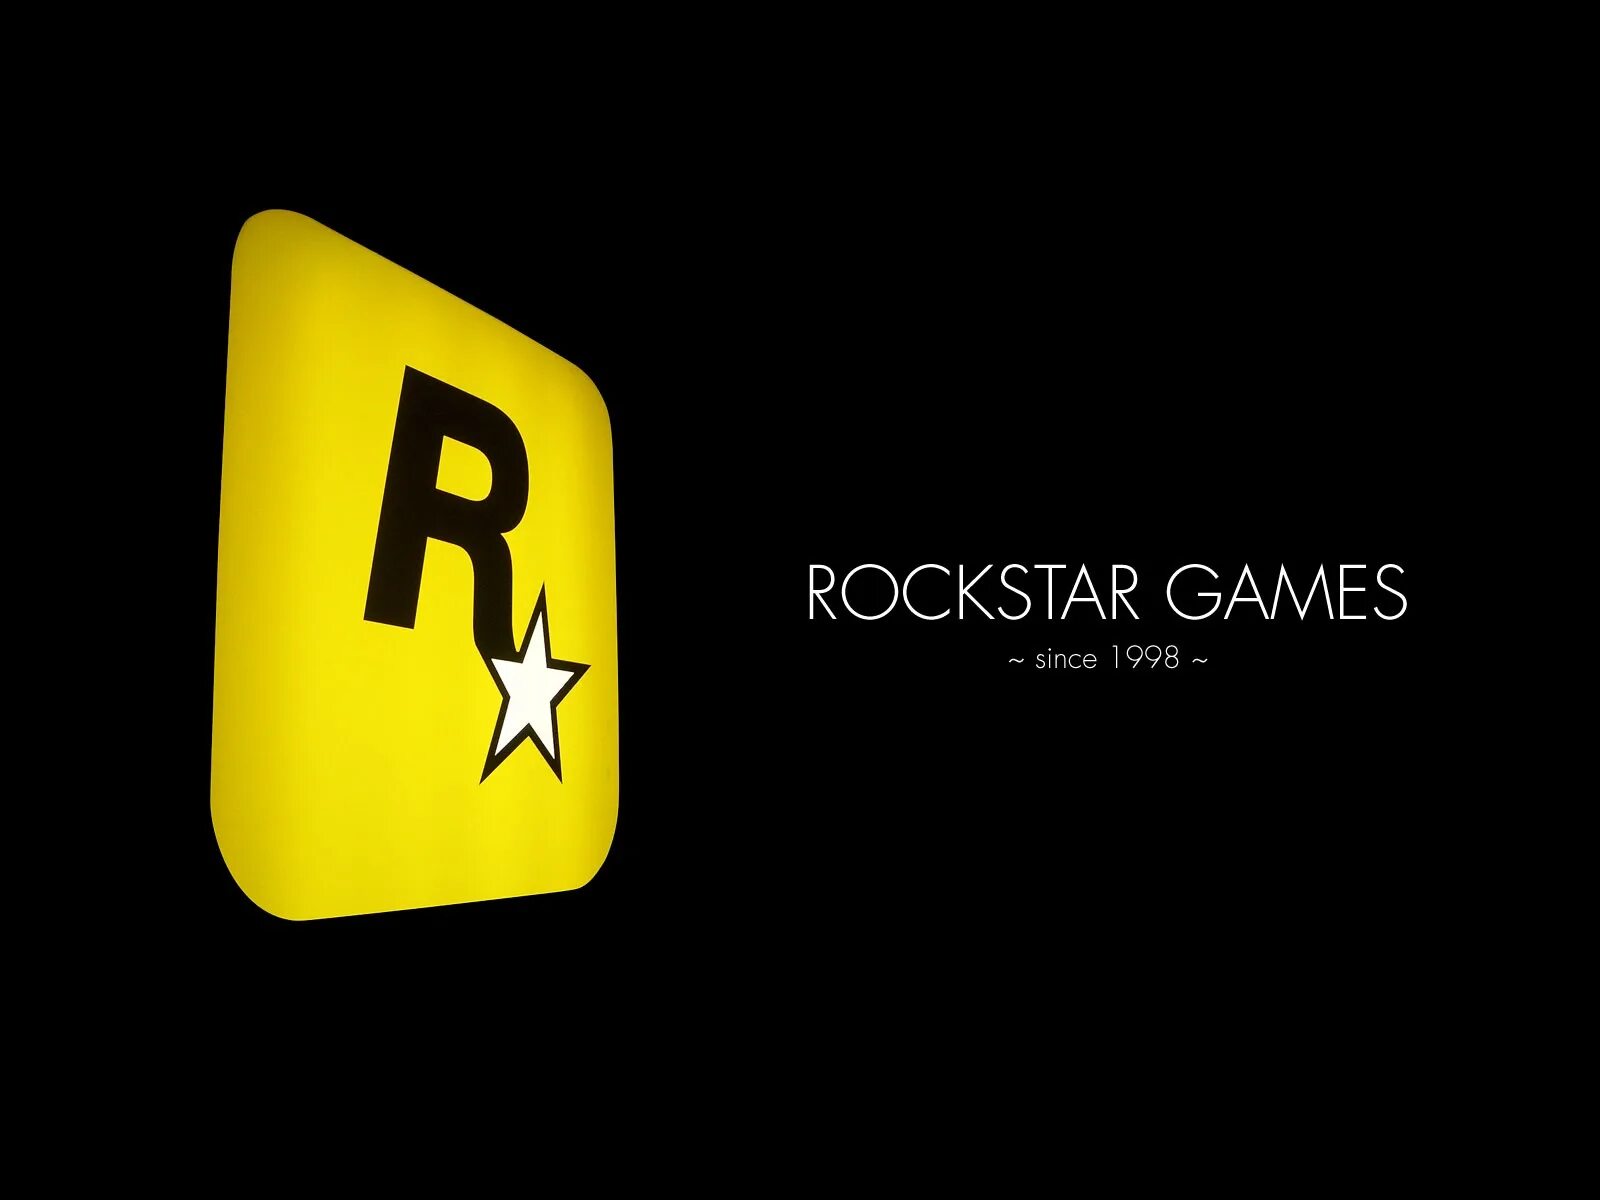 Rockstar games файлы. Rockstar games. Логотип рокстар. Rooster game. Игры Rockstar.